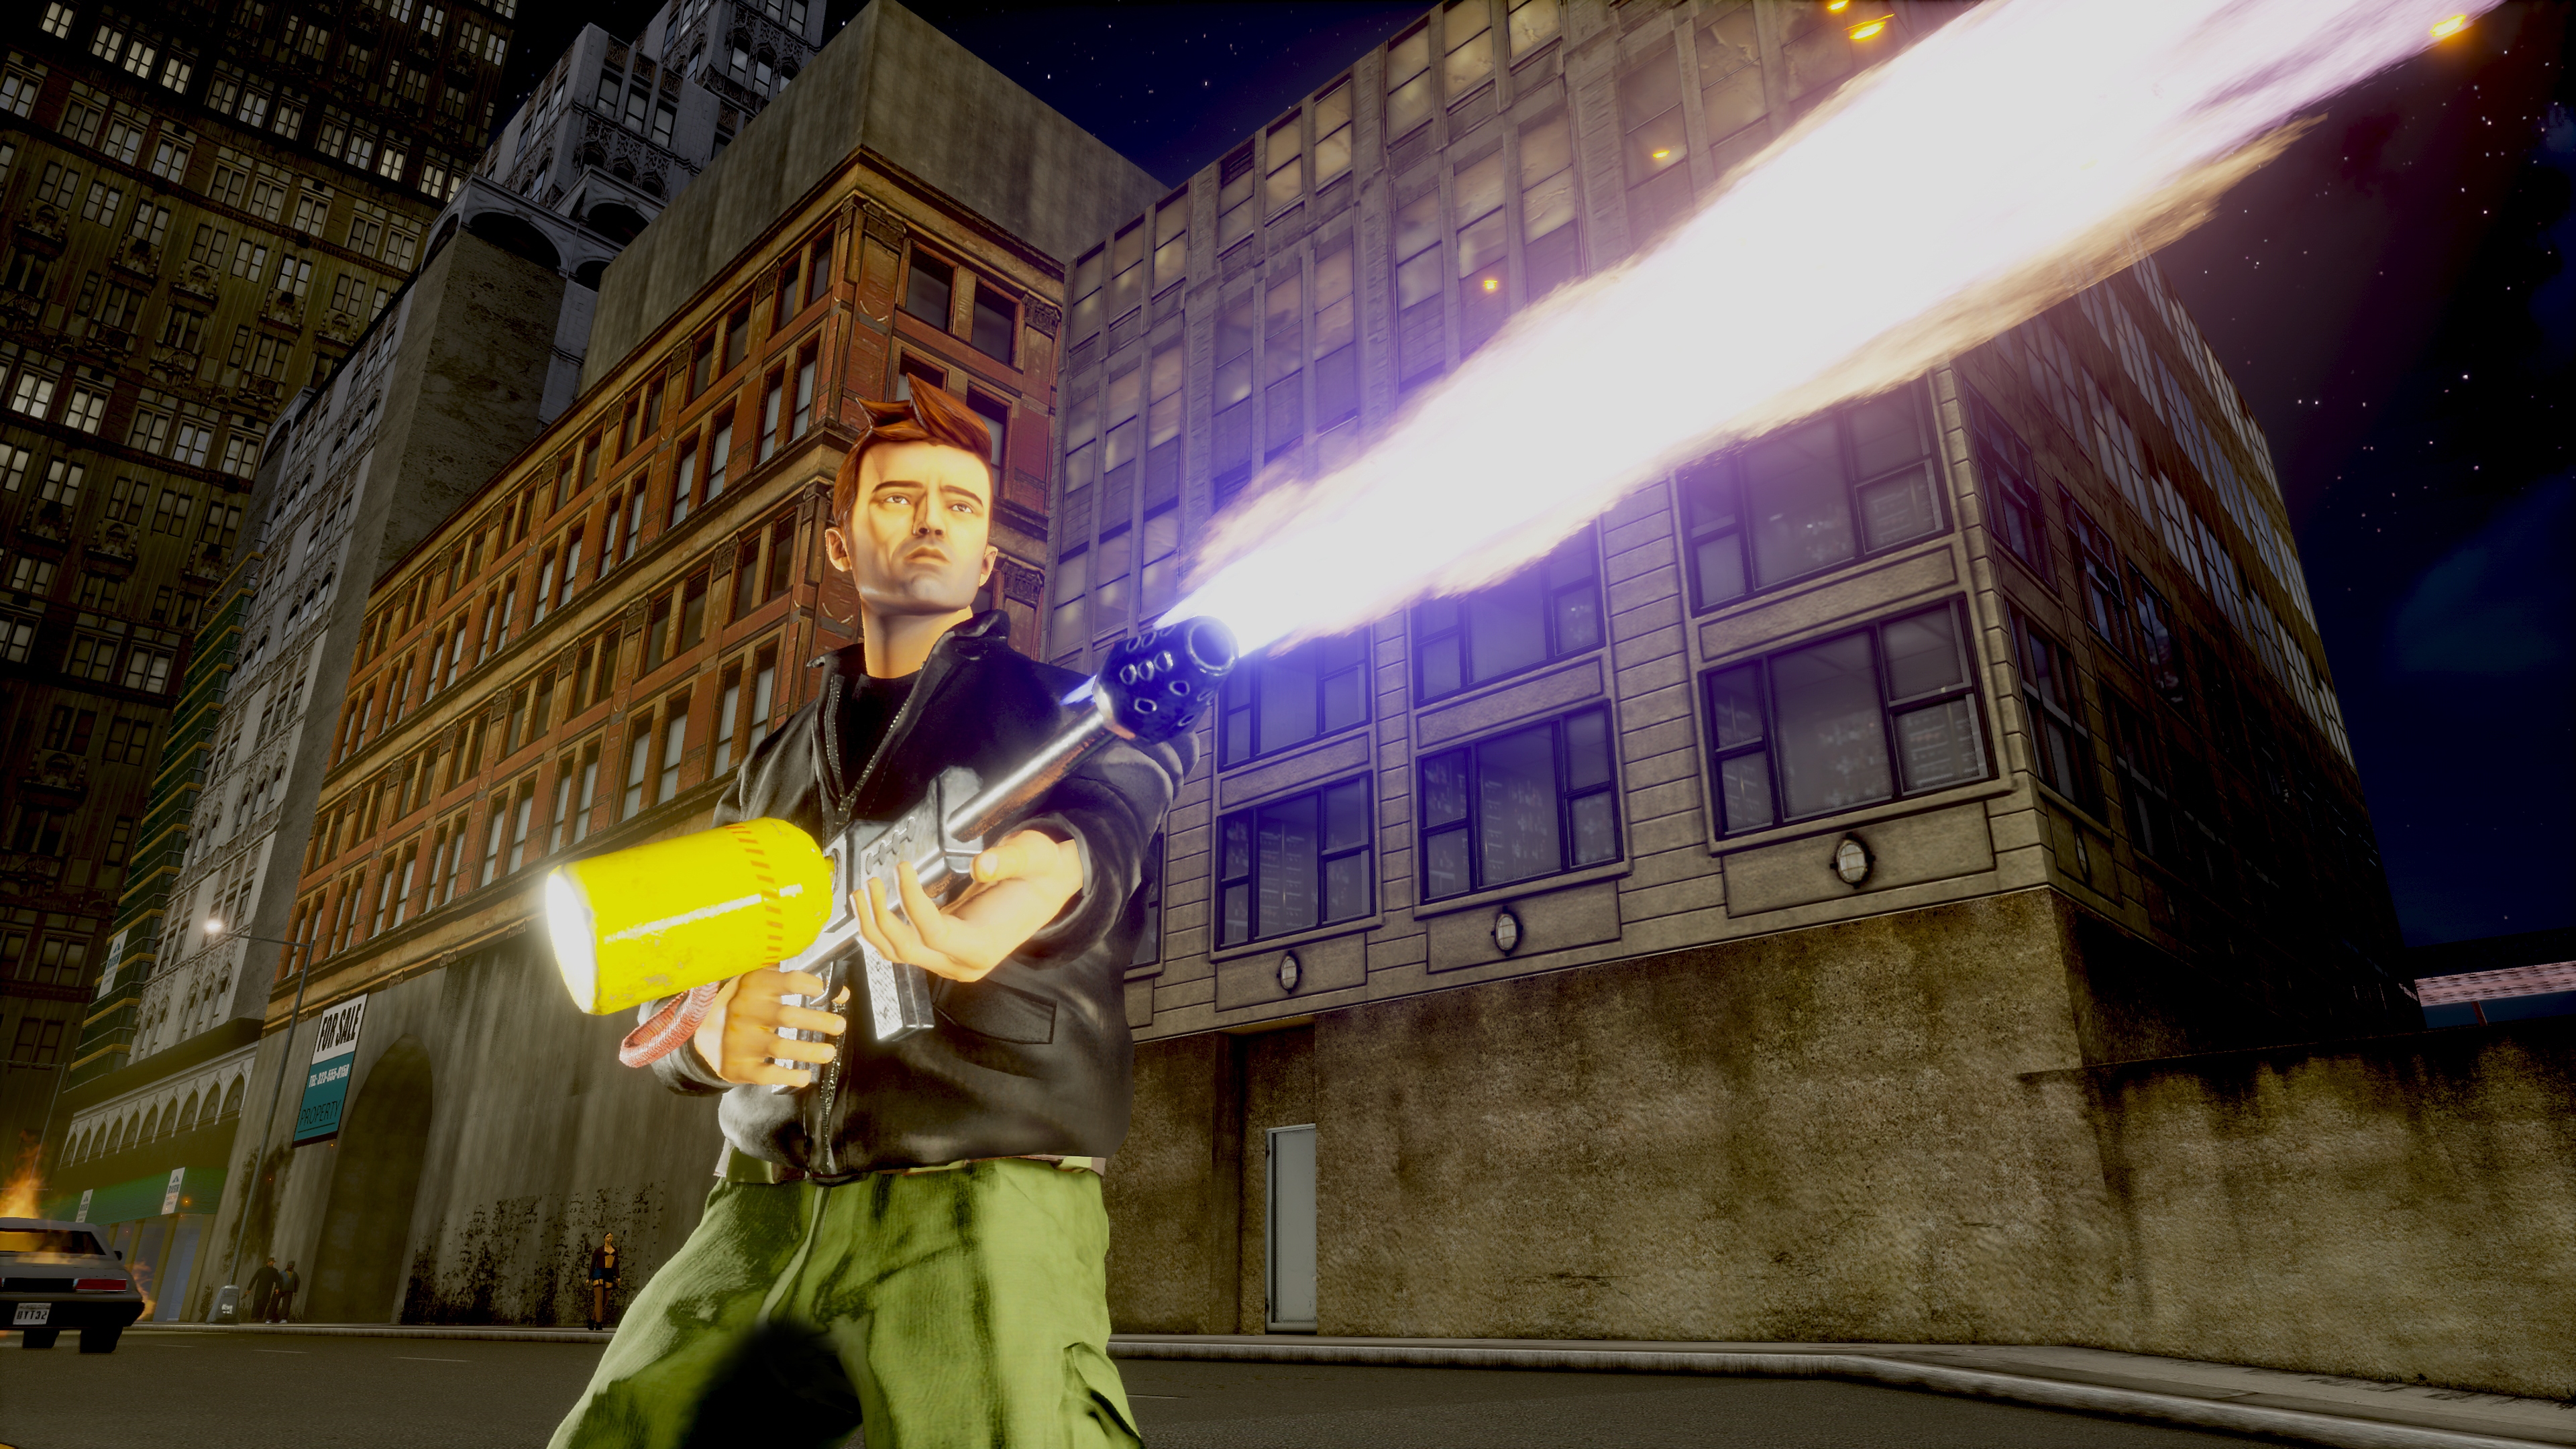  Grand Theft Auto III – снимок экрана 1 из галереи